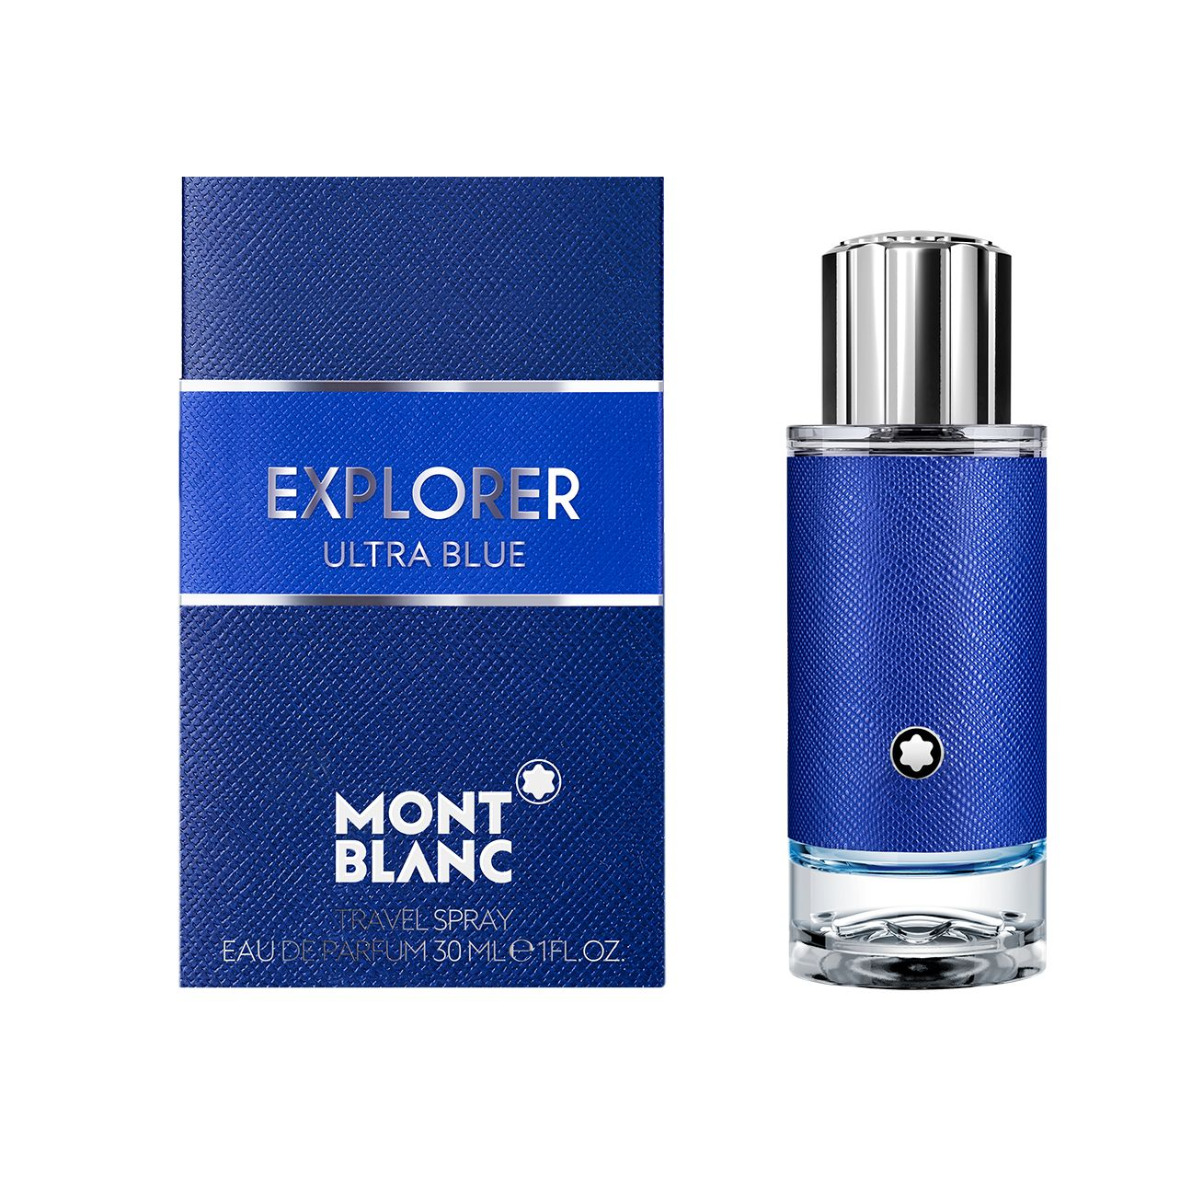 MONTBLANC EXPLORER ULTRA BLUE EdP 30 ml MONTBLANC